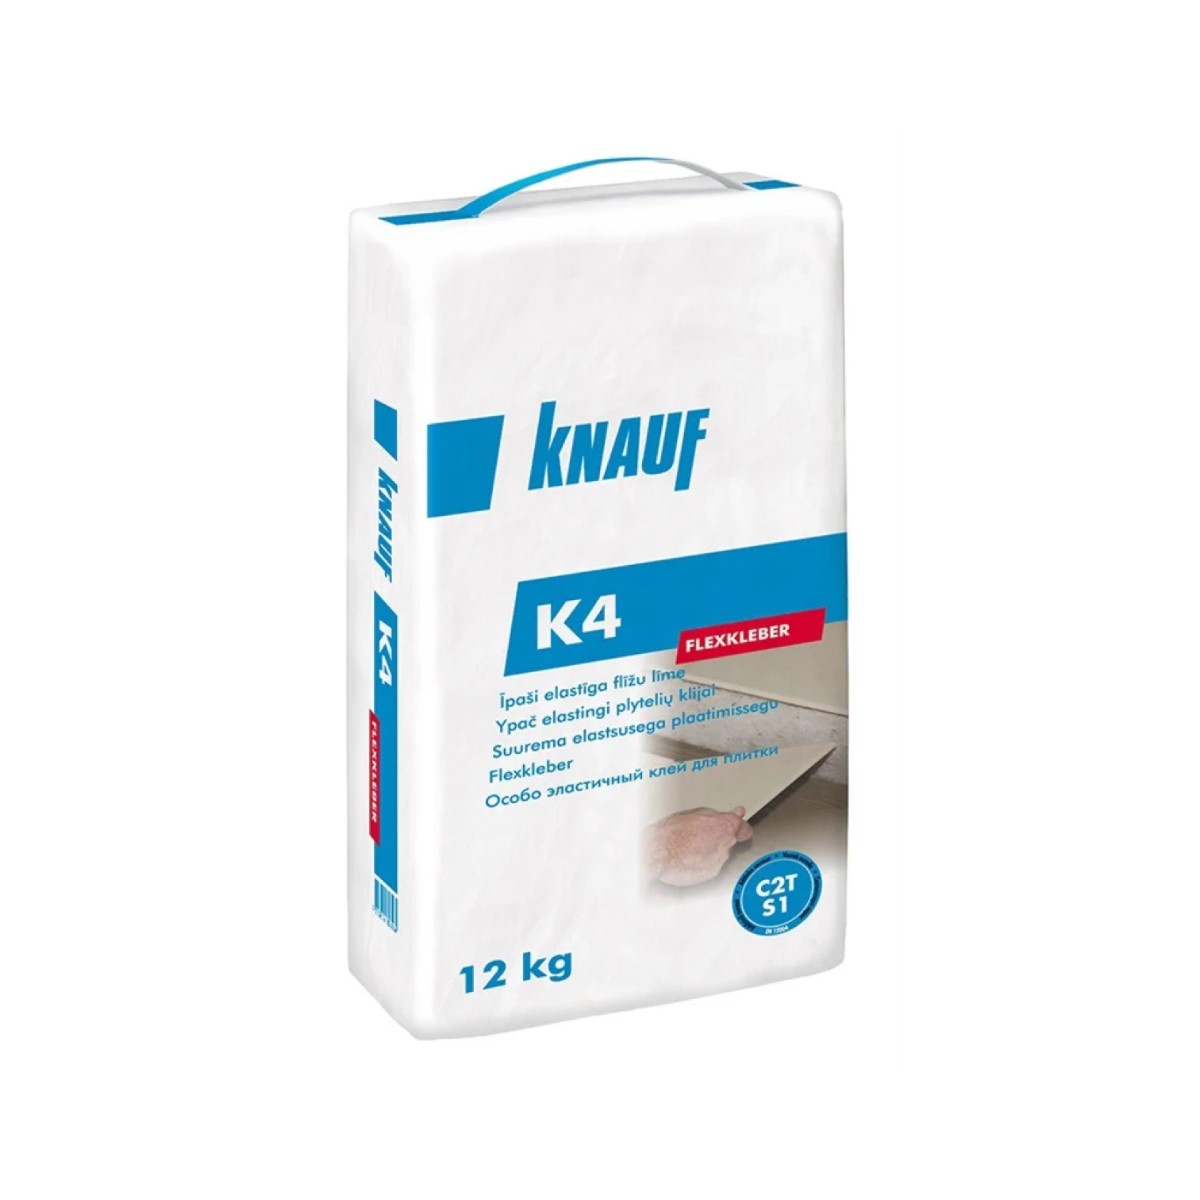 Knauf K4 Flexkleber īpaši elastīga flīžu līme (C2T S1), 12kg